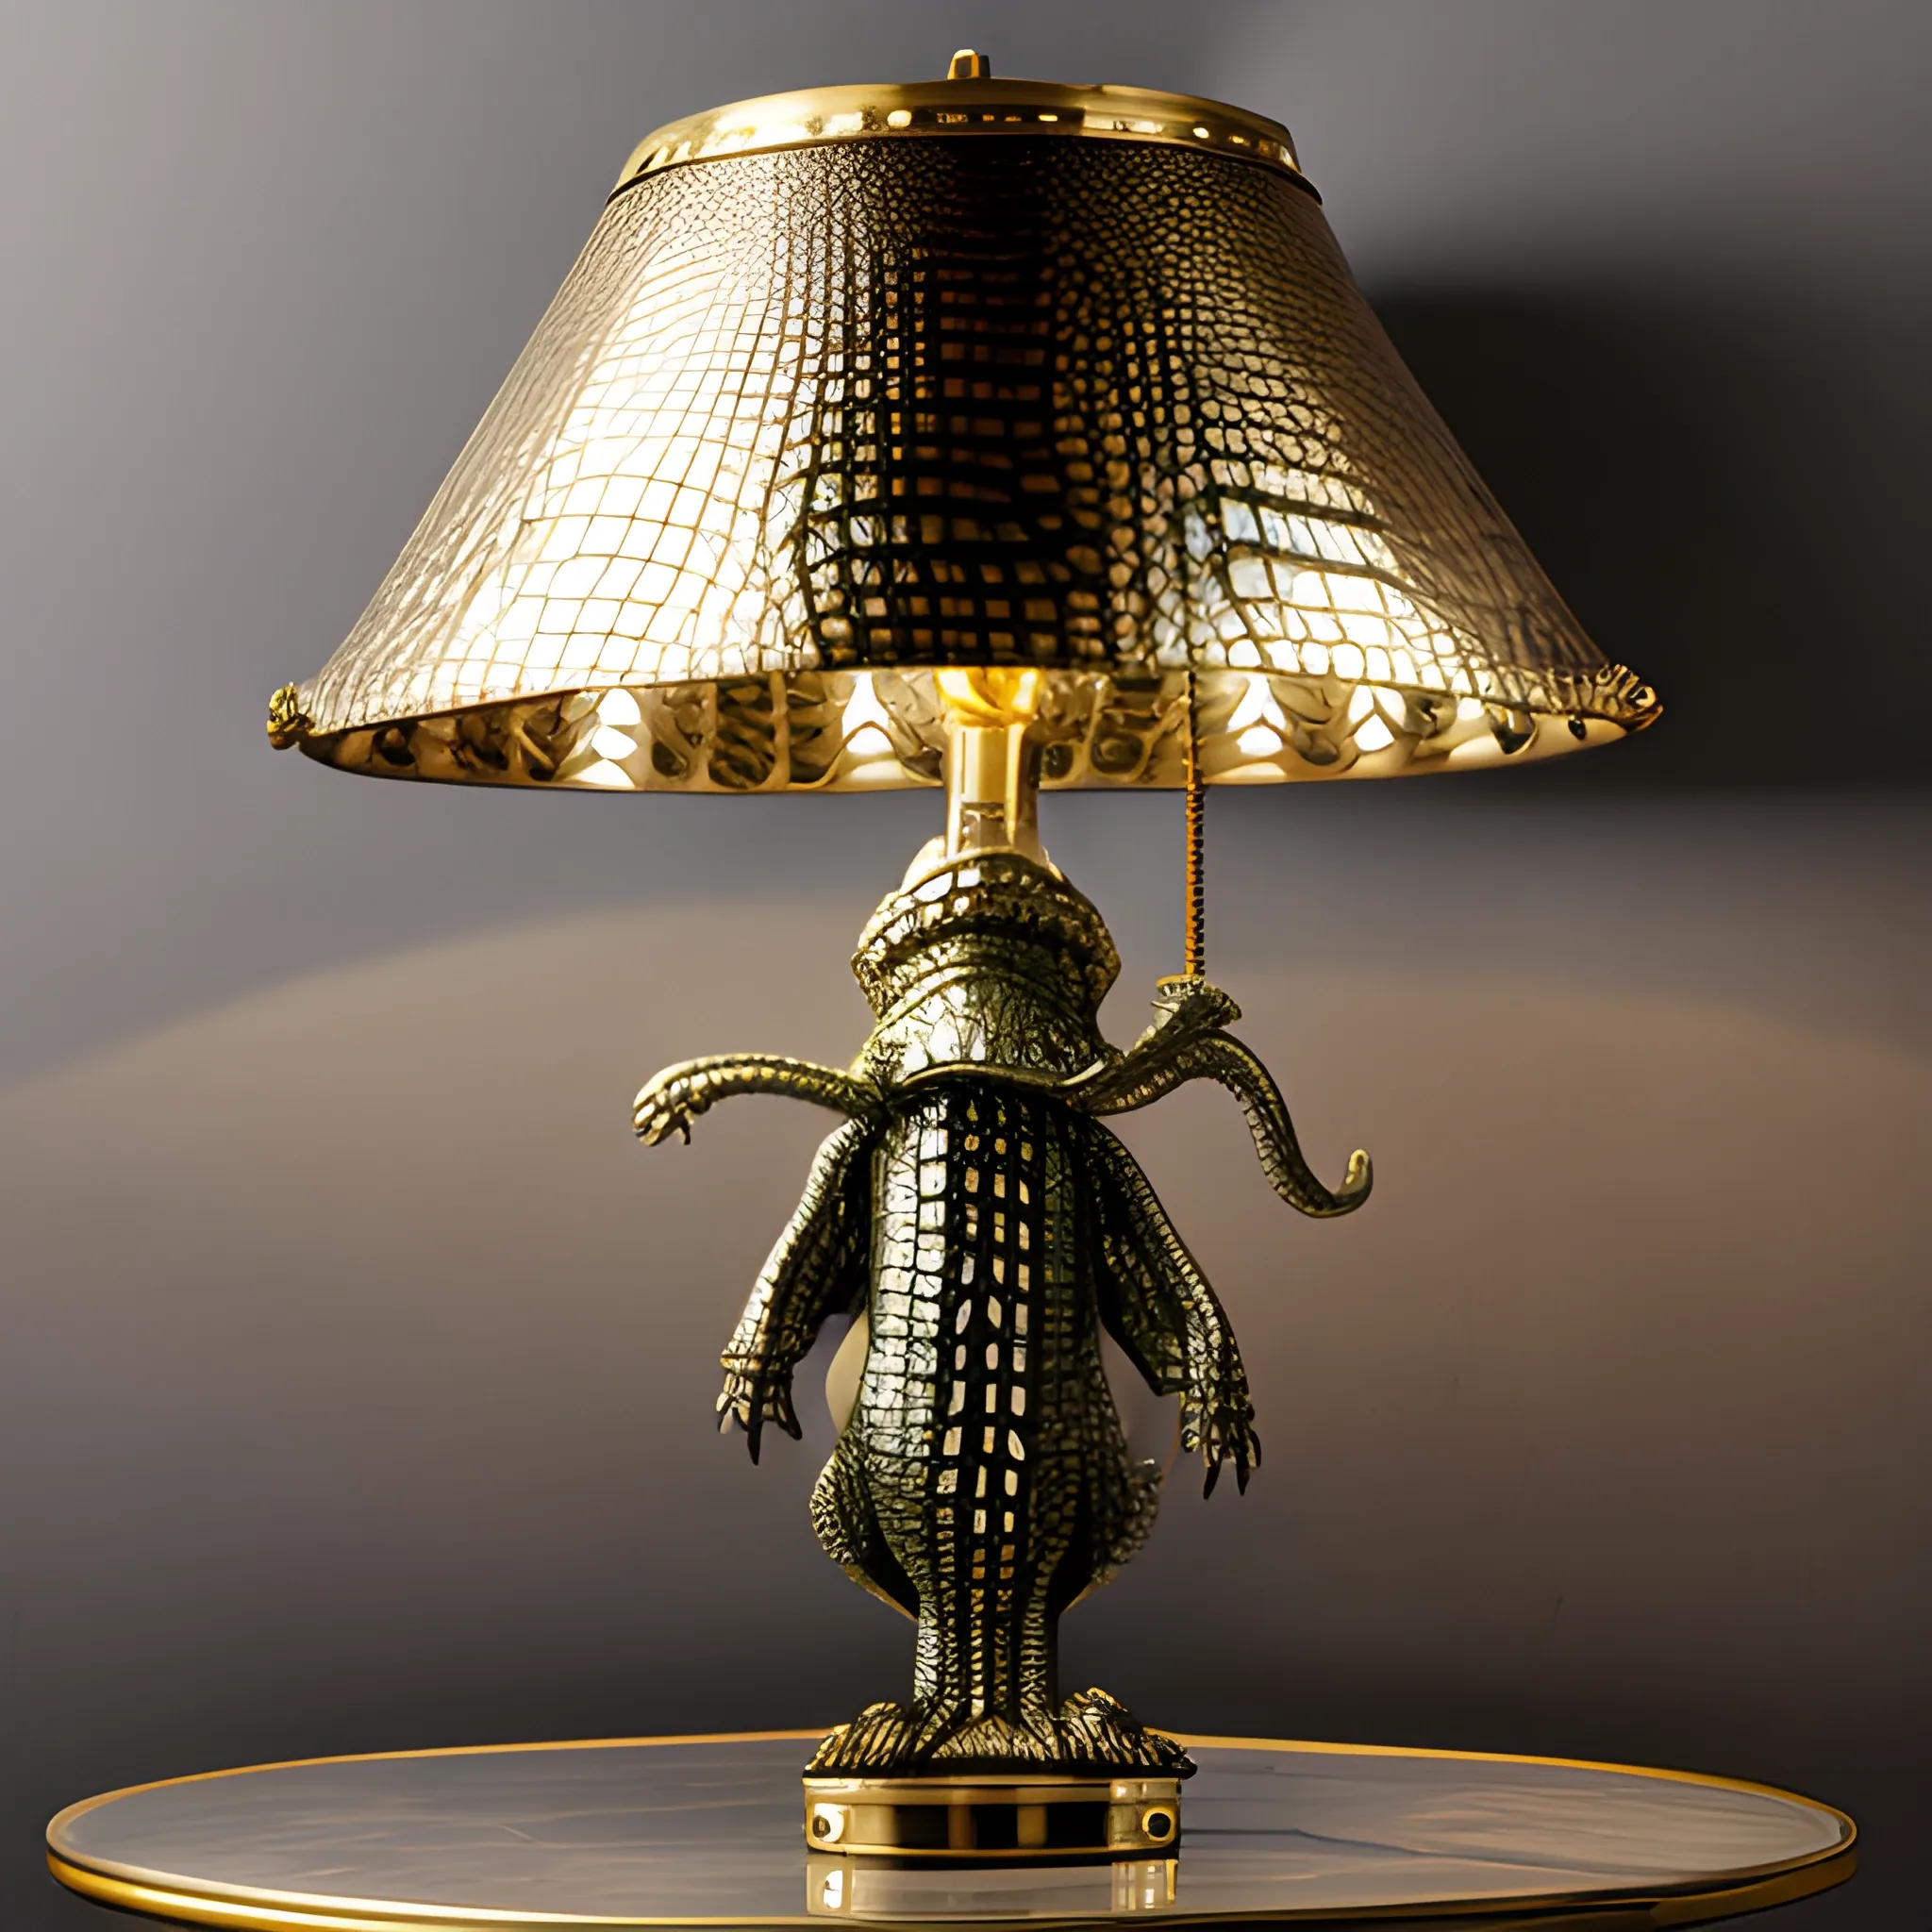 lamp with Liquid metal crocodile  skin  